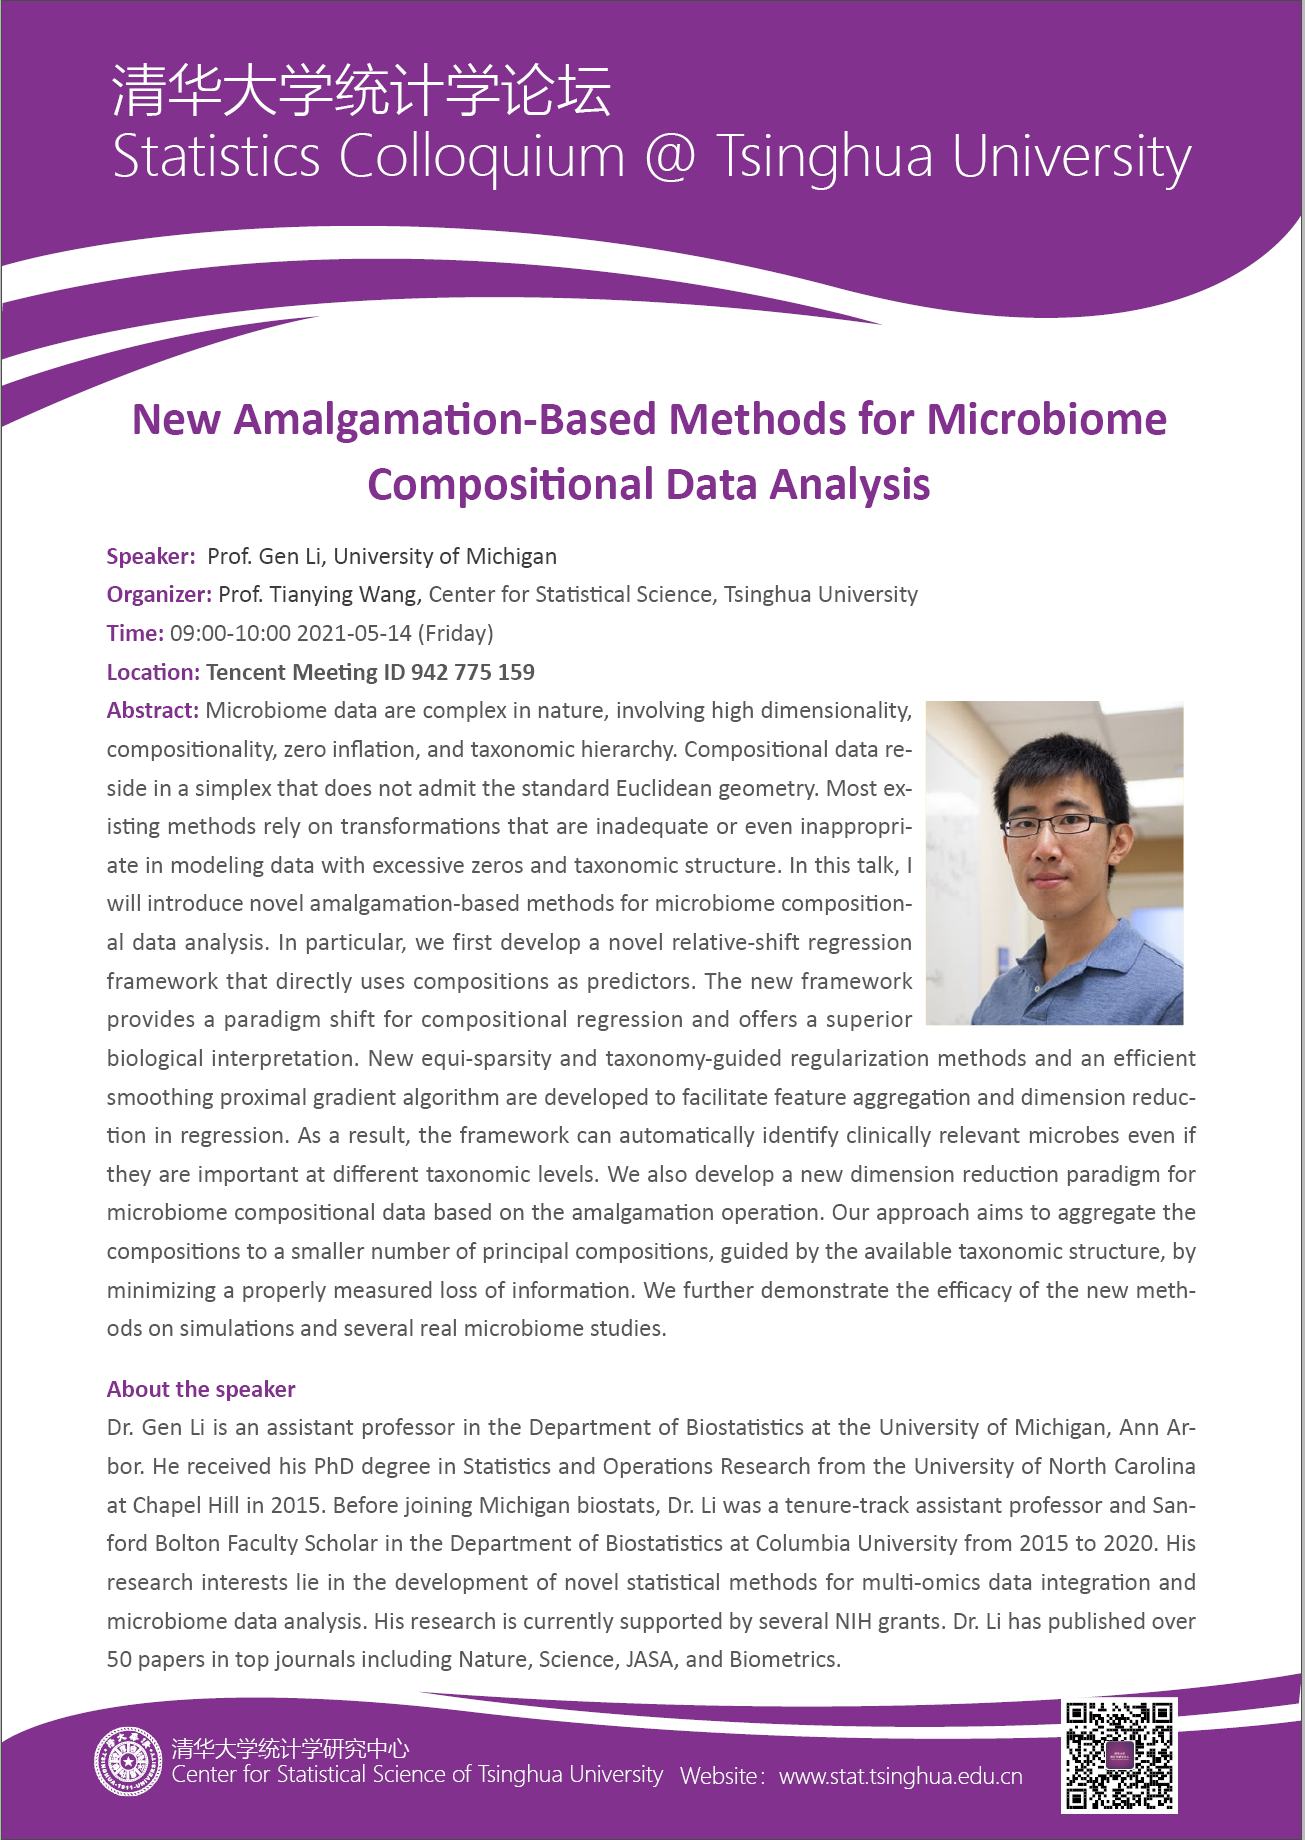 New Amalgamation-Based Methods for Microbiome Compositional Data Analysis